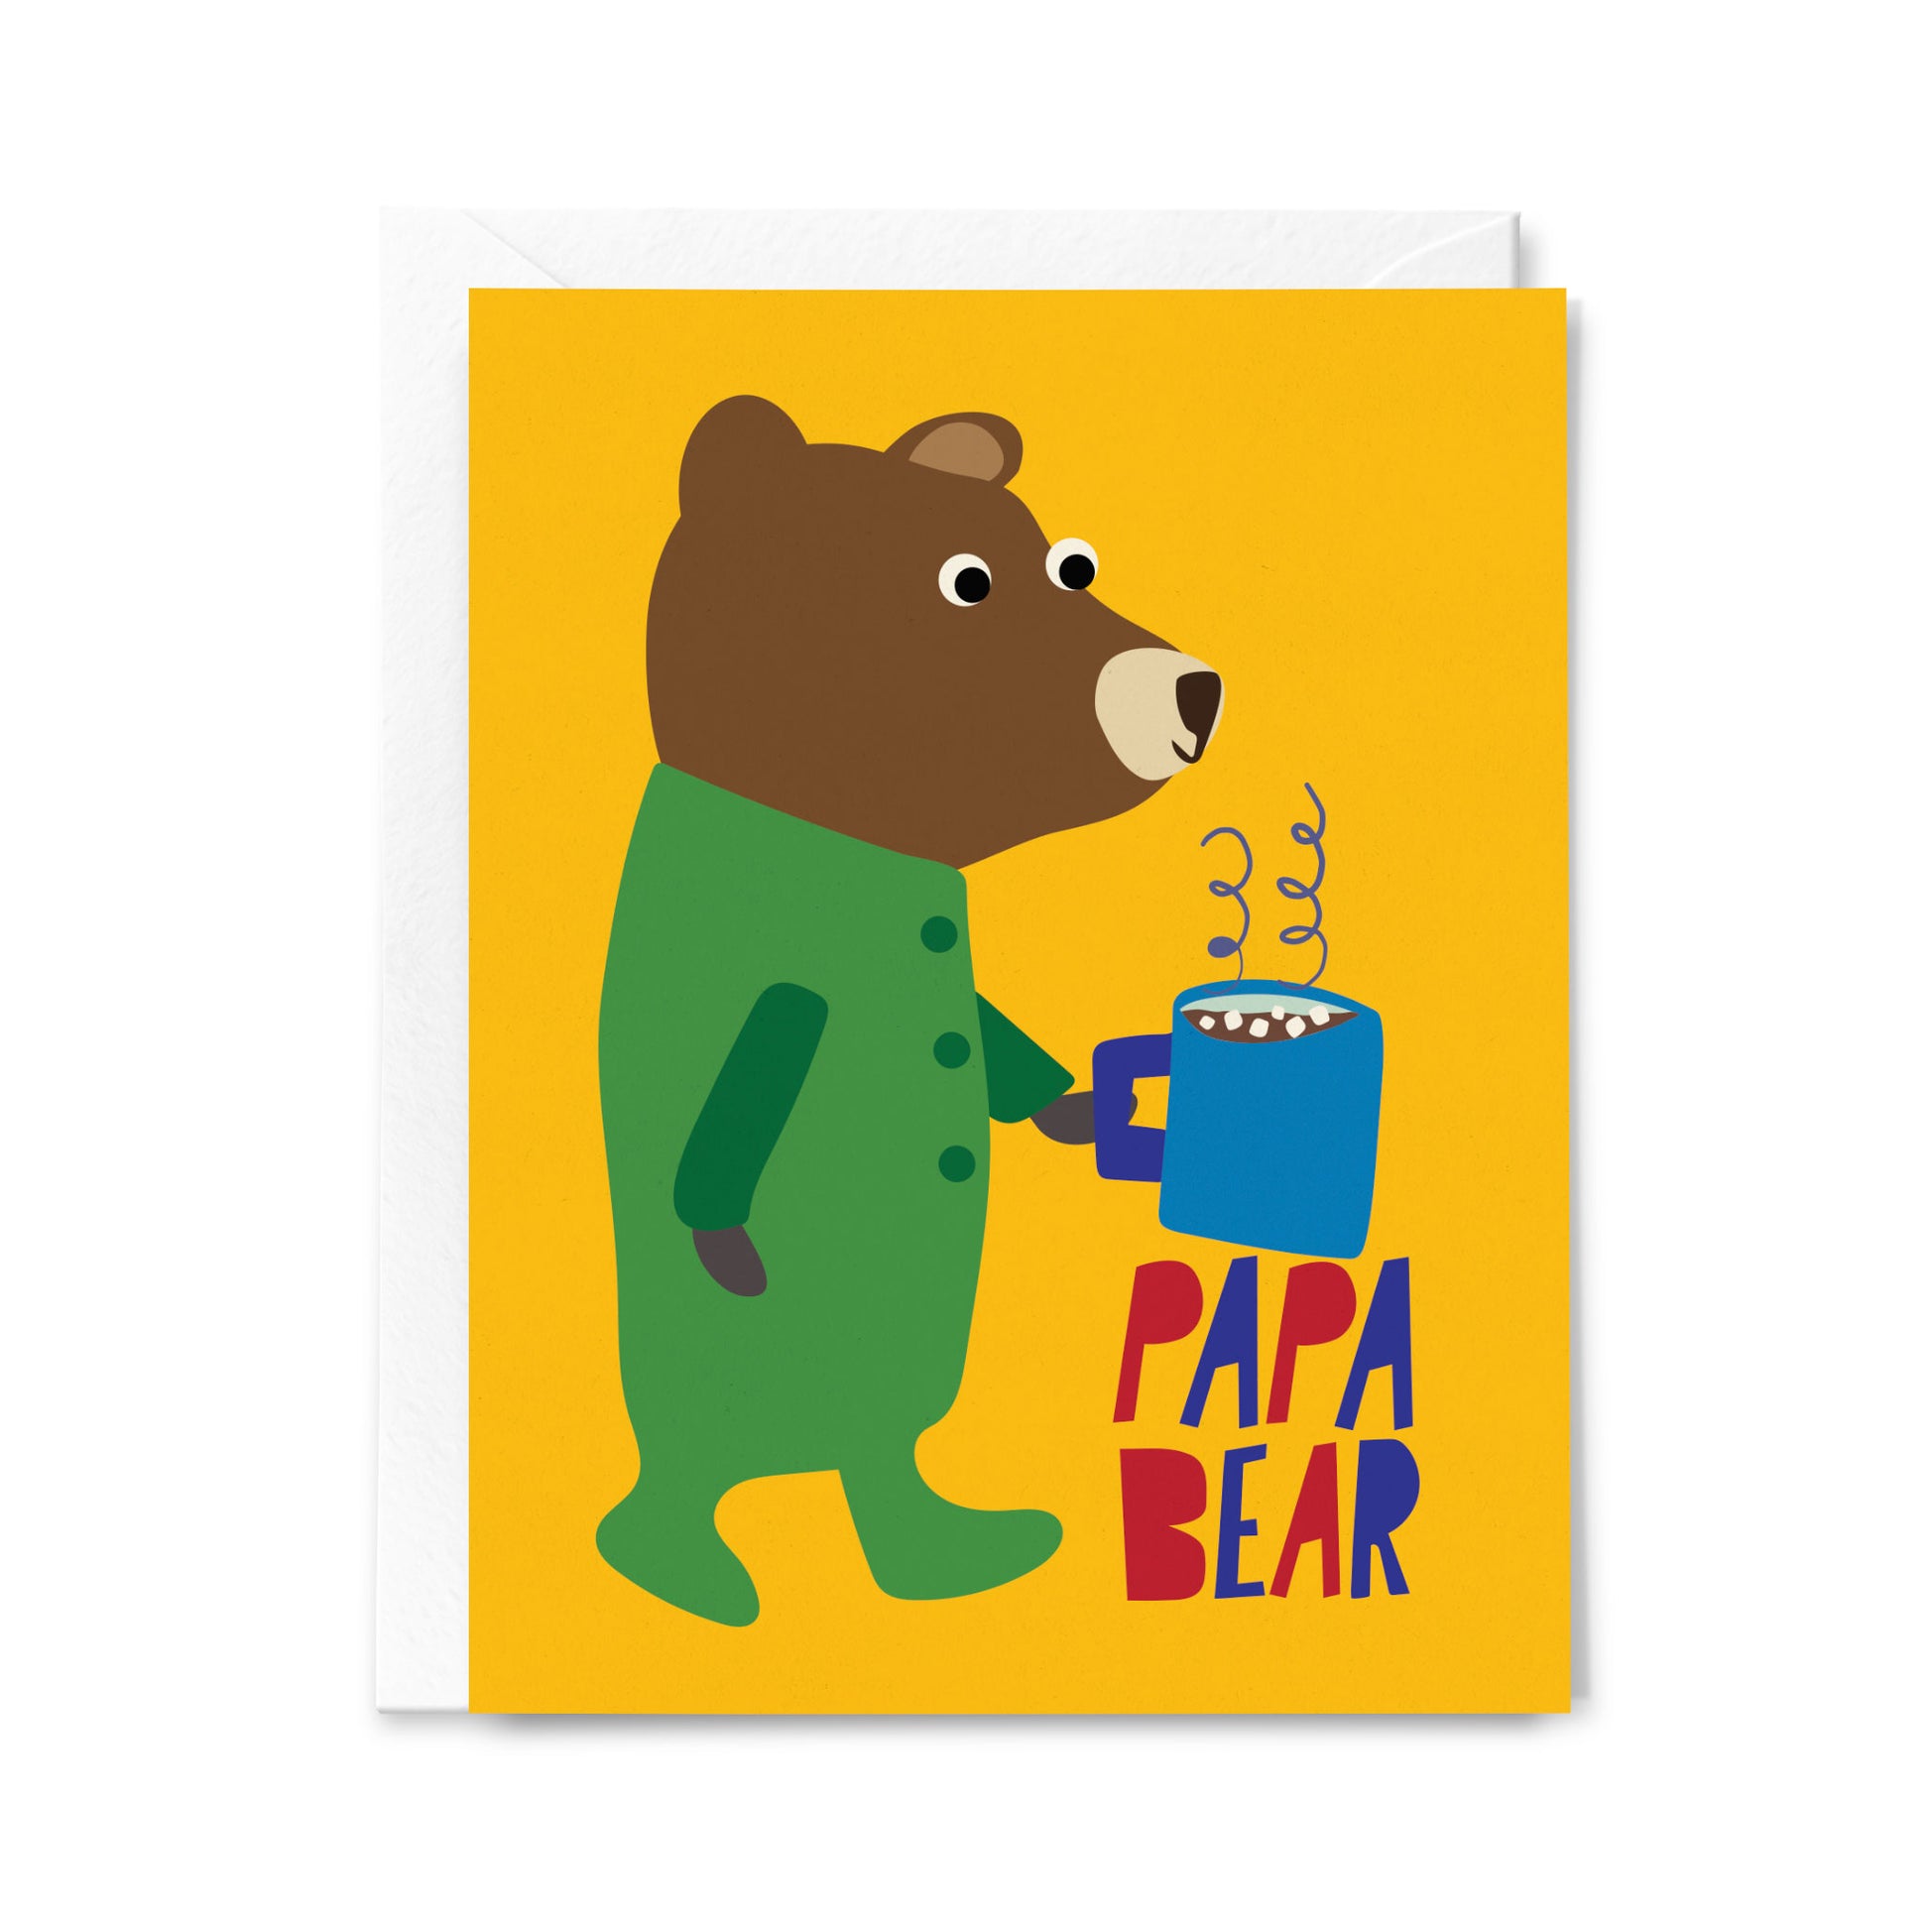 Papa Bear Store